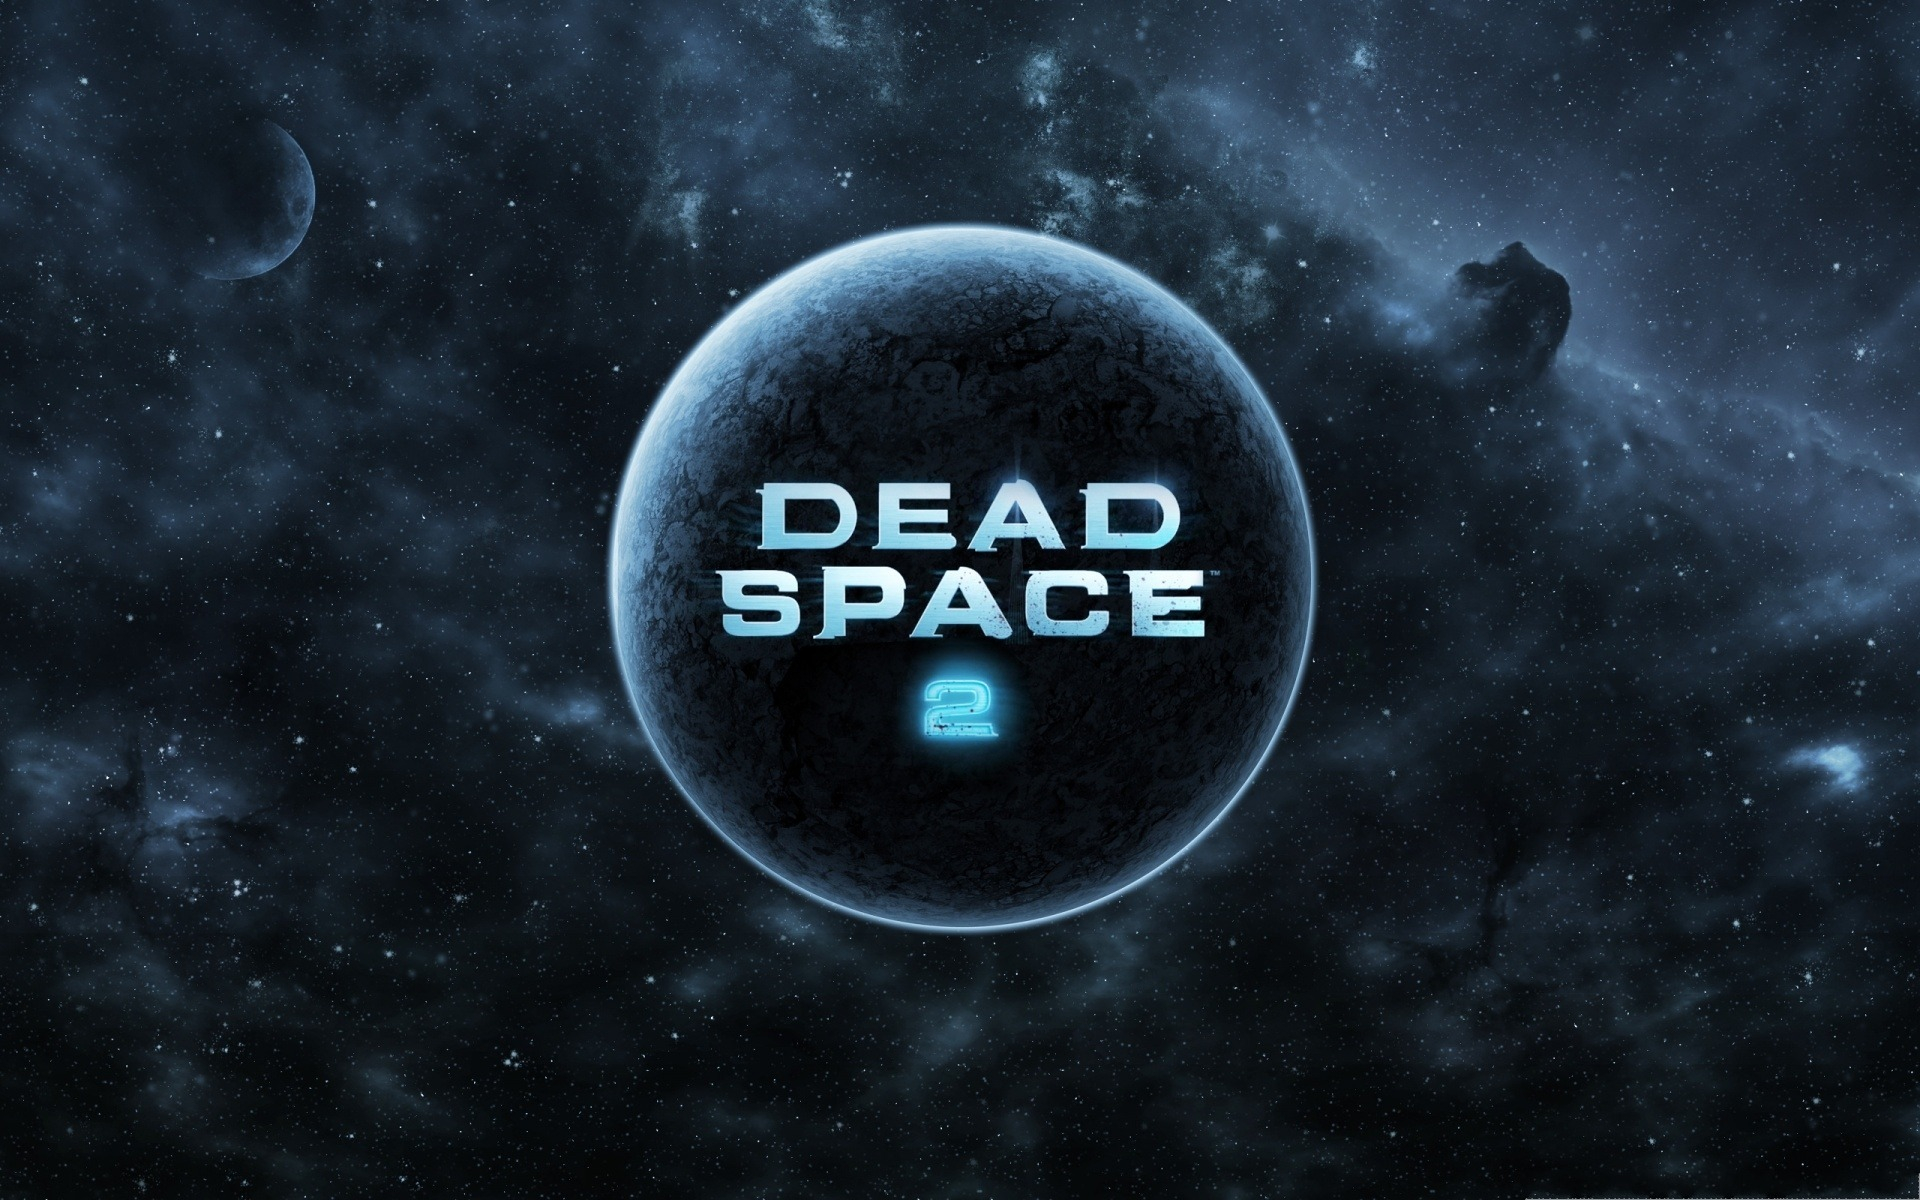 New space 2. Обои на рабочий стол дед Спейс 2. Игра Space. Dead Space Планета.